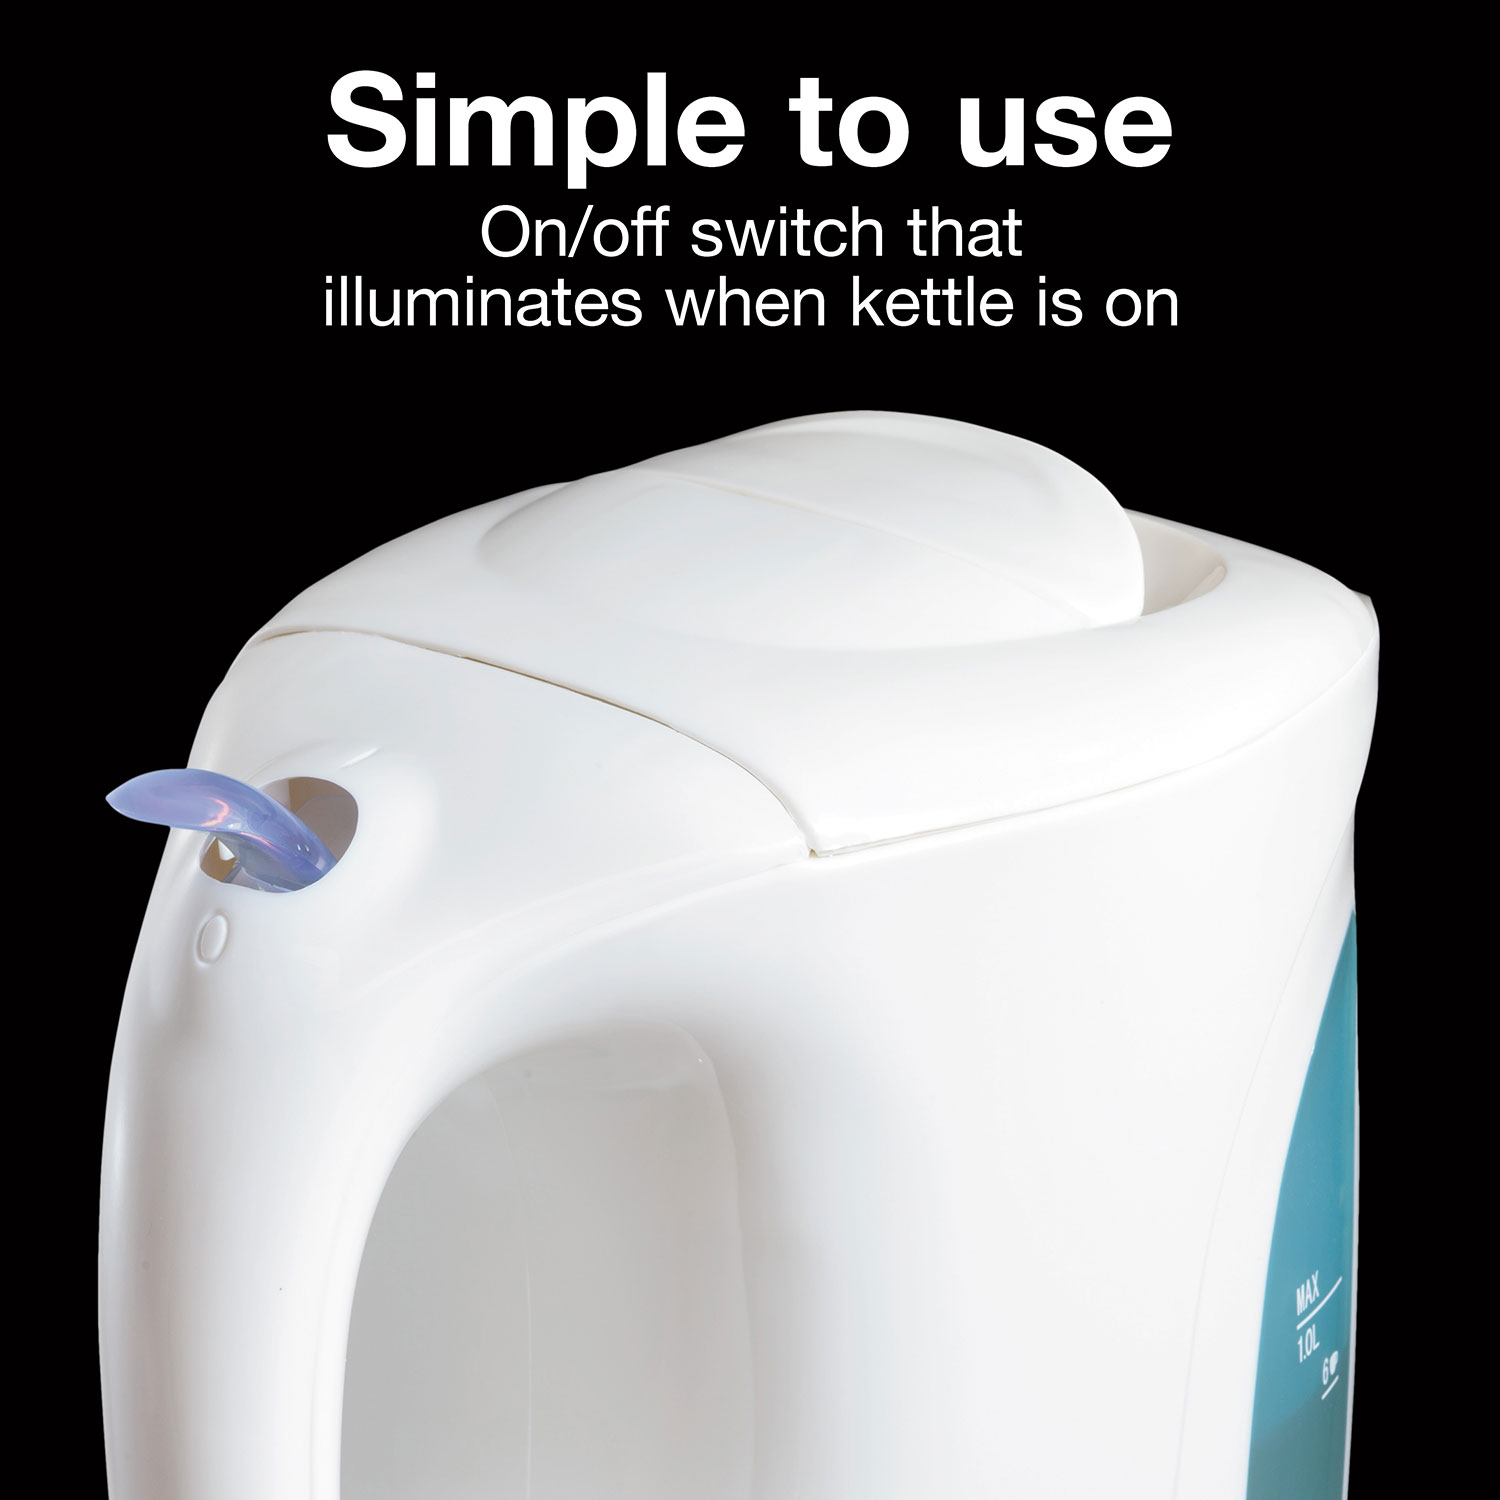 Prepology 1.7-Liter Electric Tea Kettle 